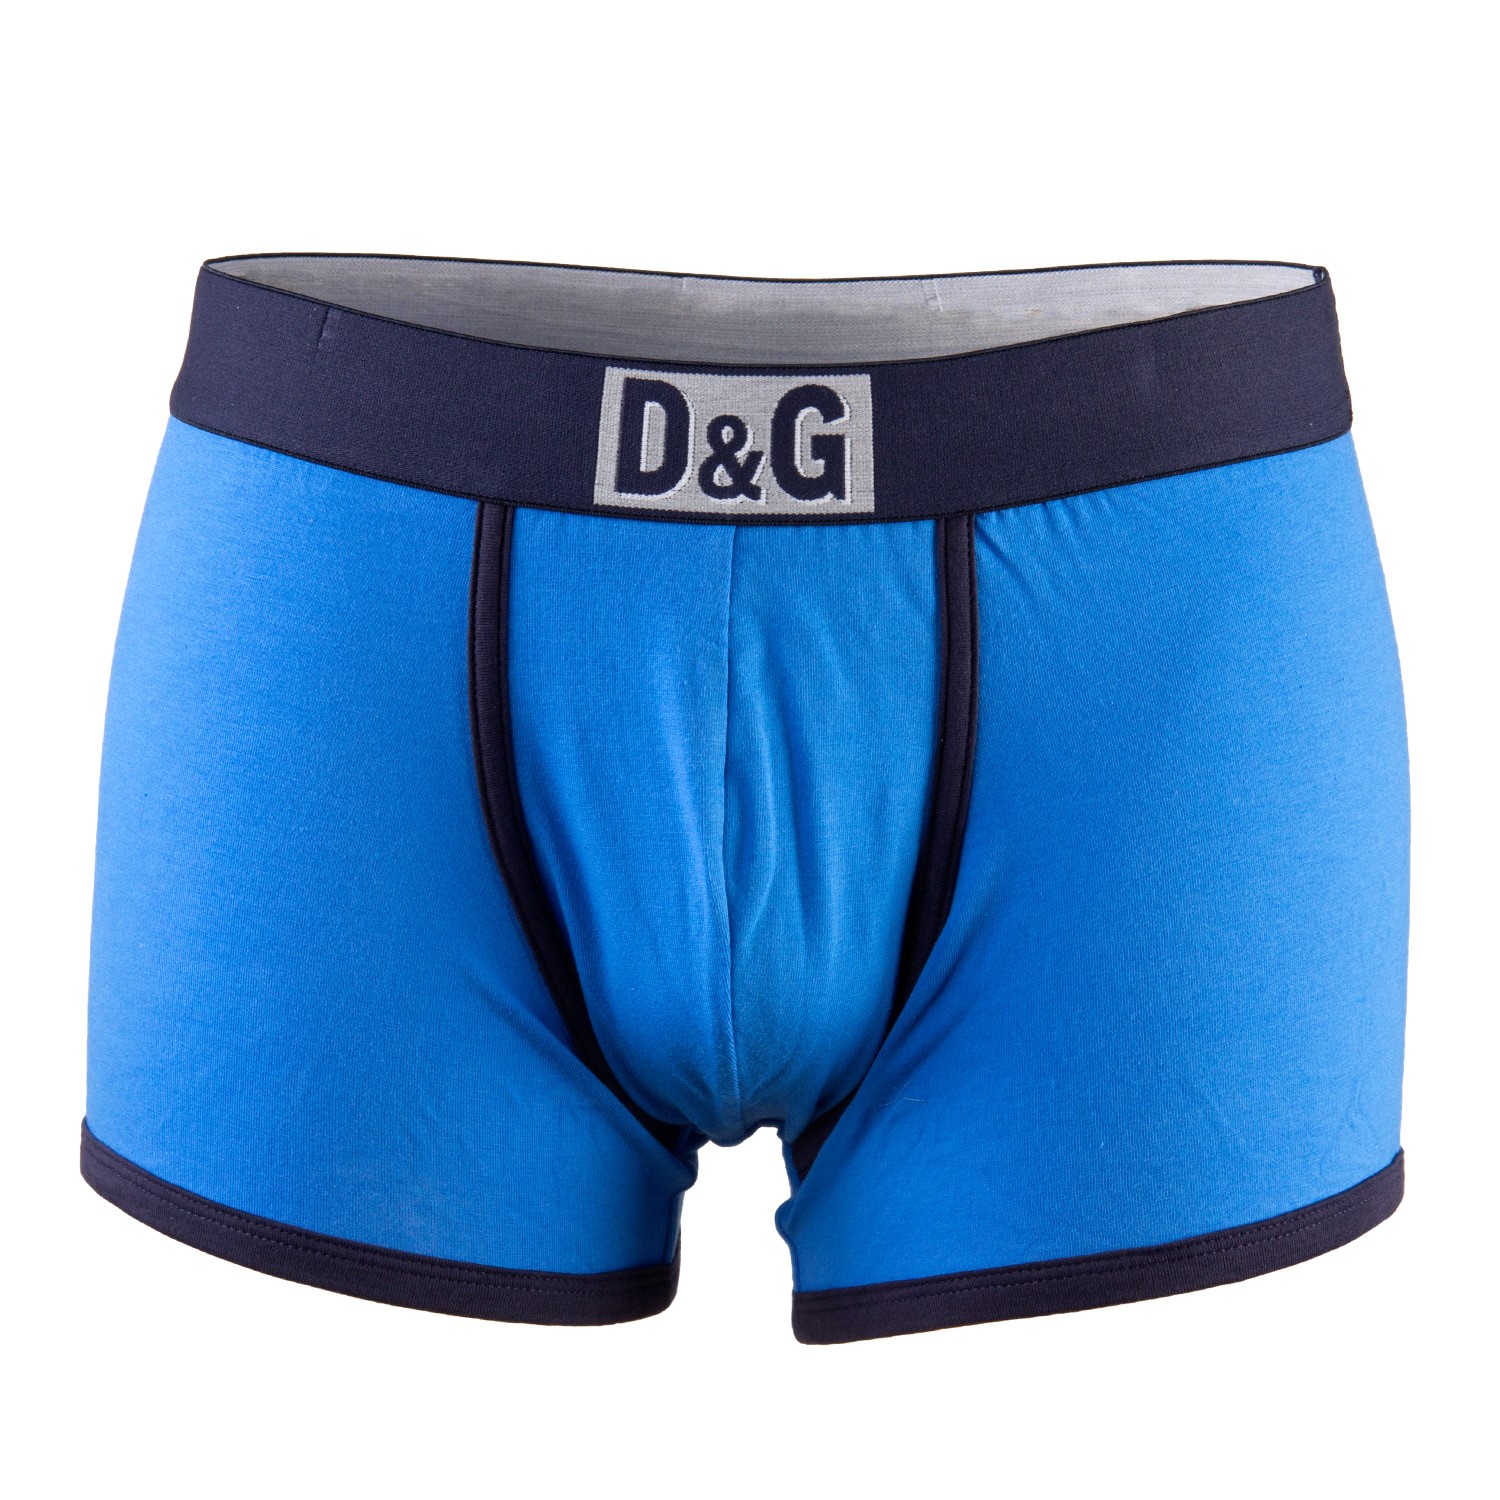 D&G Regular Boxer Blue - Trunks - Underwear - Timarco.co.uk